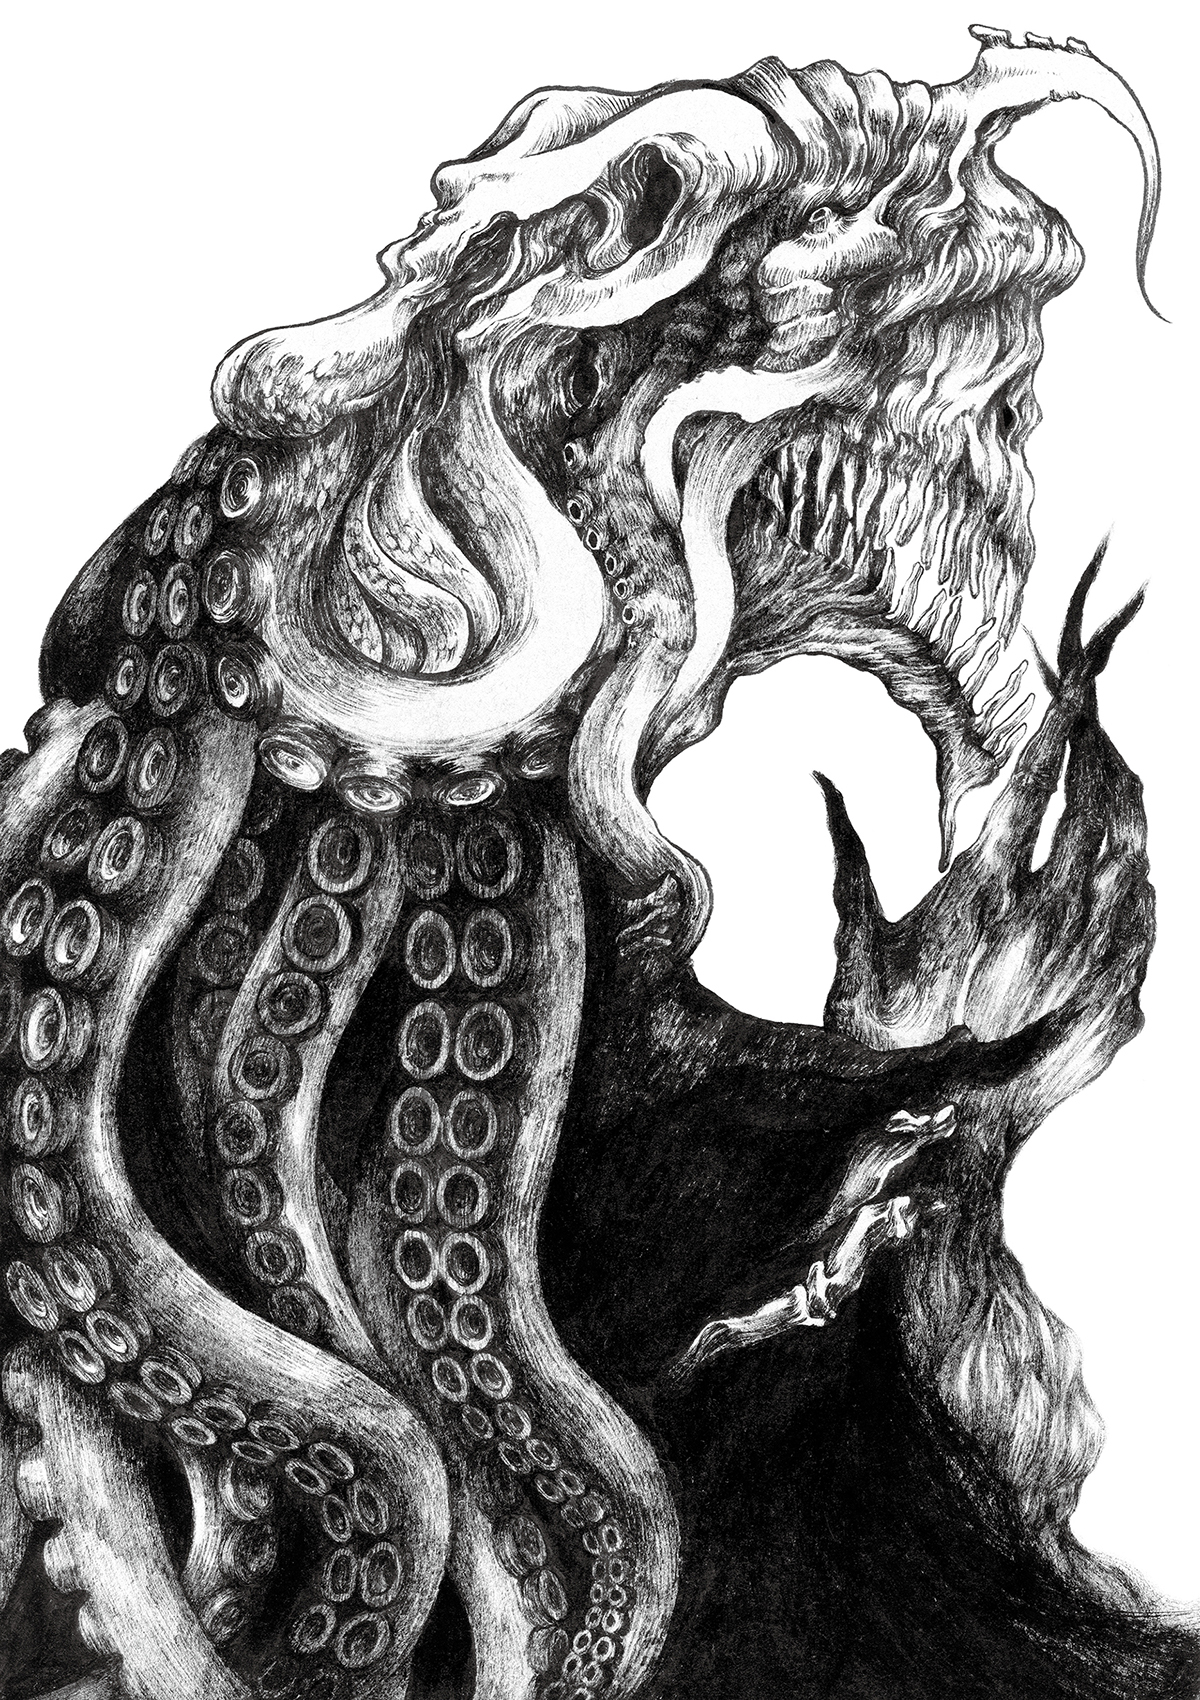 ILLUSTRATION  sea monster myth print poster